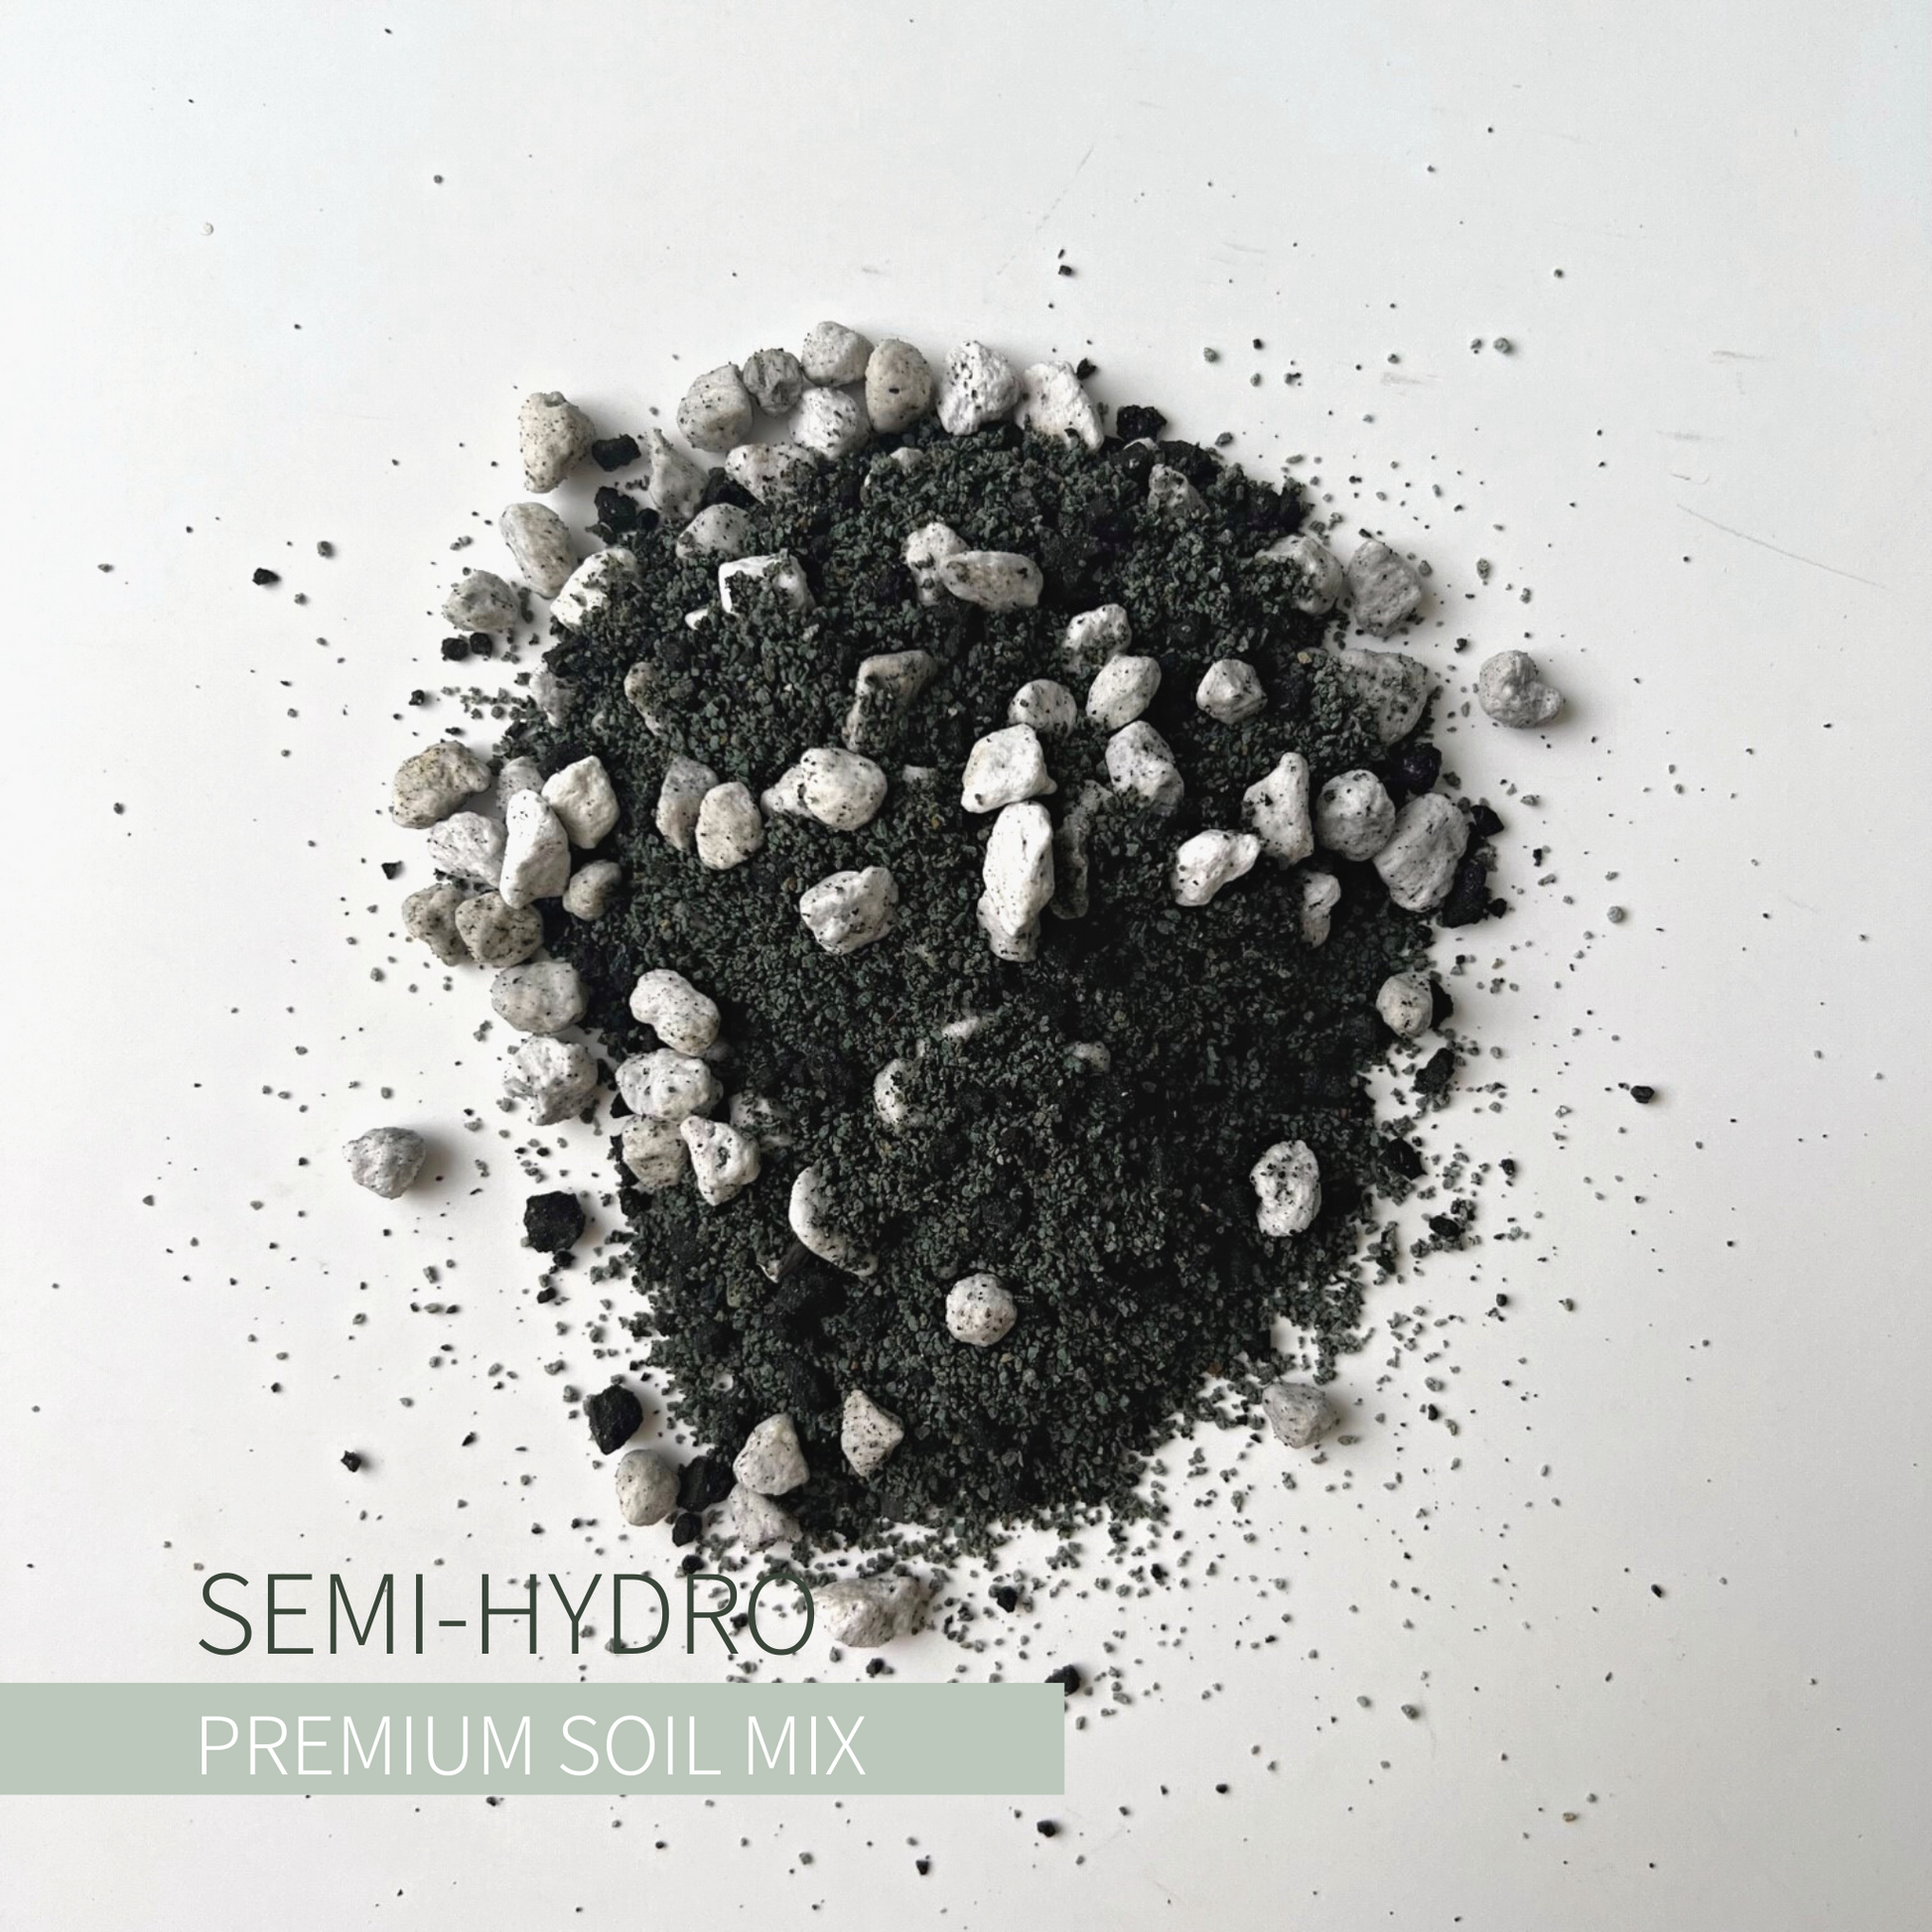 Birdy's Plants Premium Semi-Hydro Soil Mix.